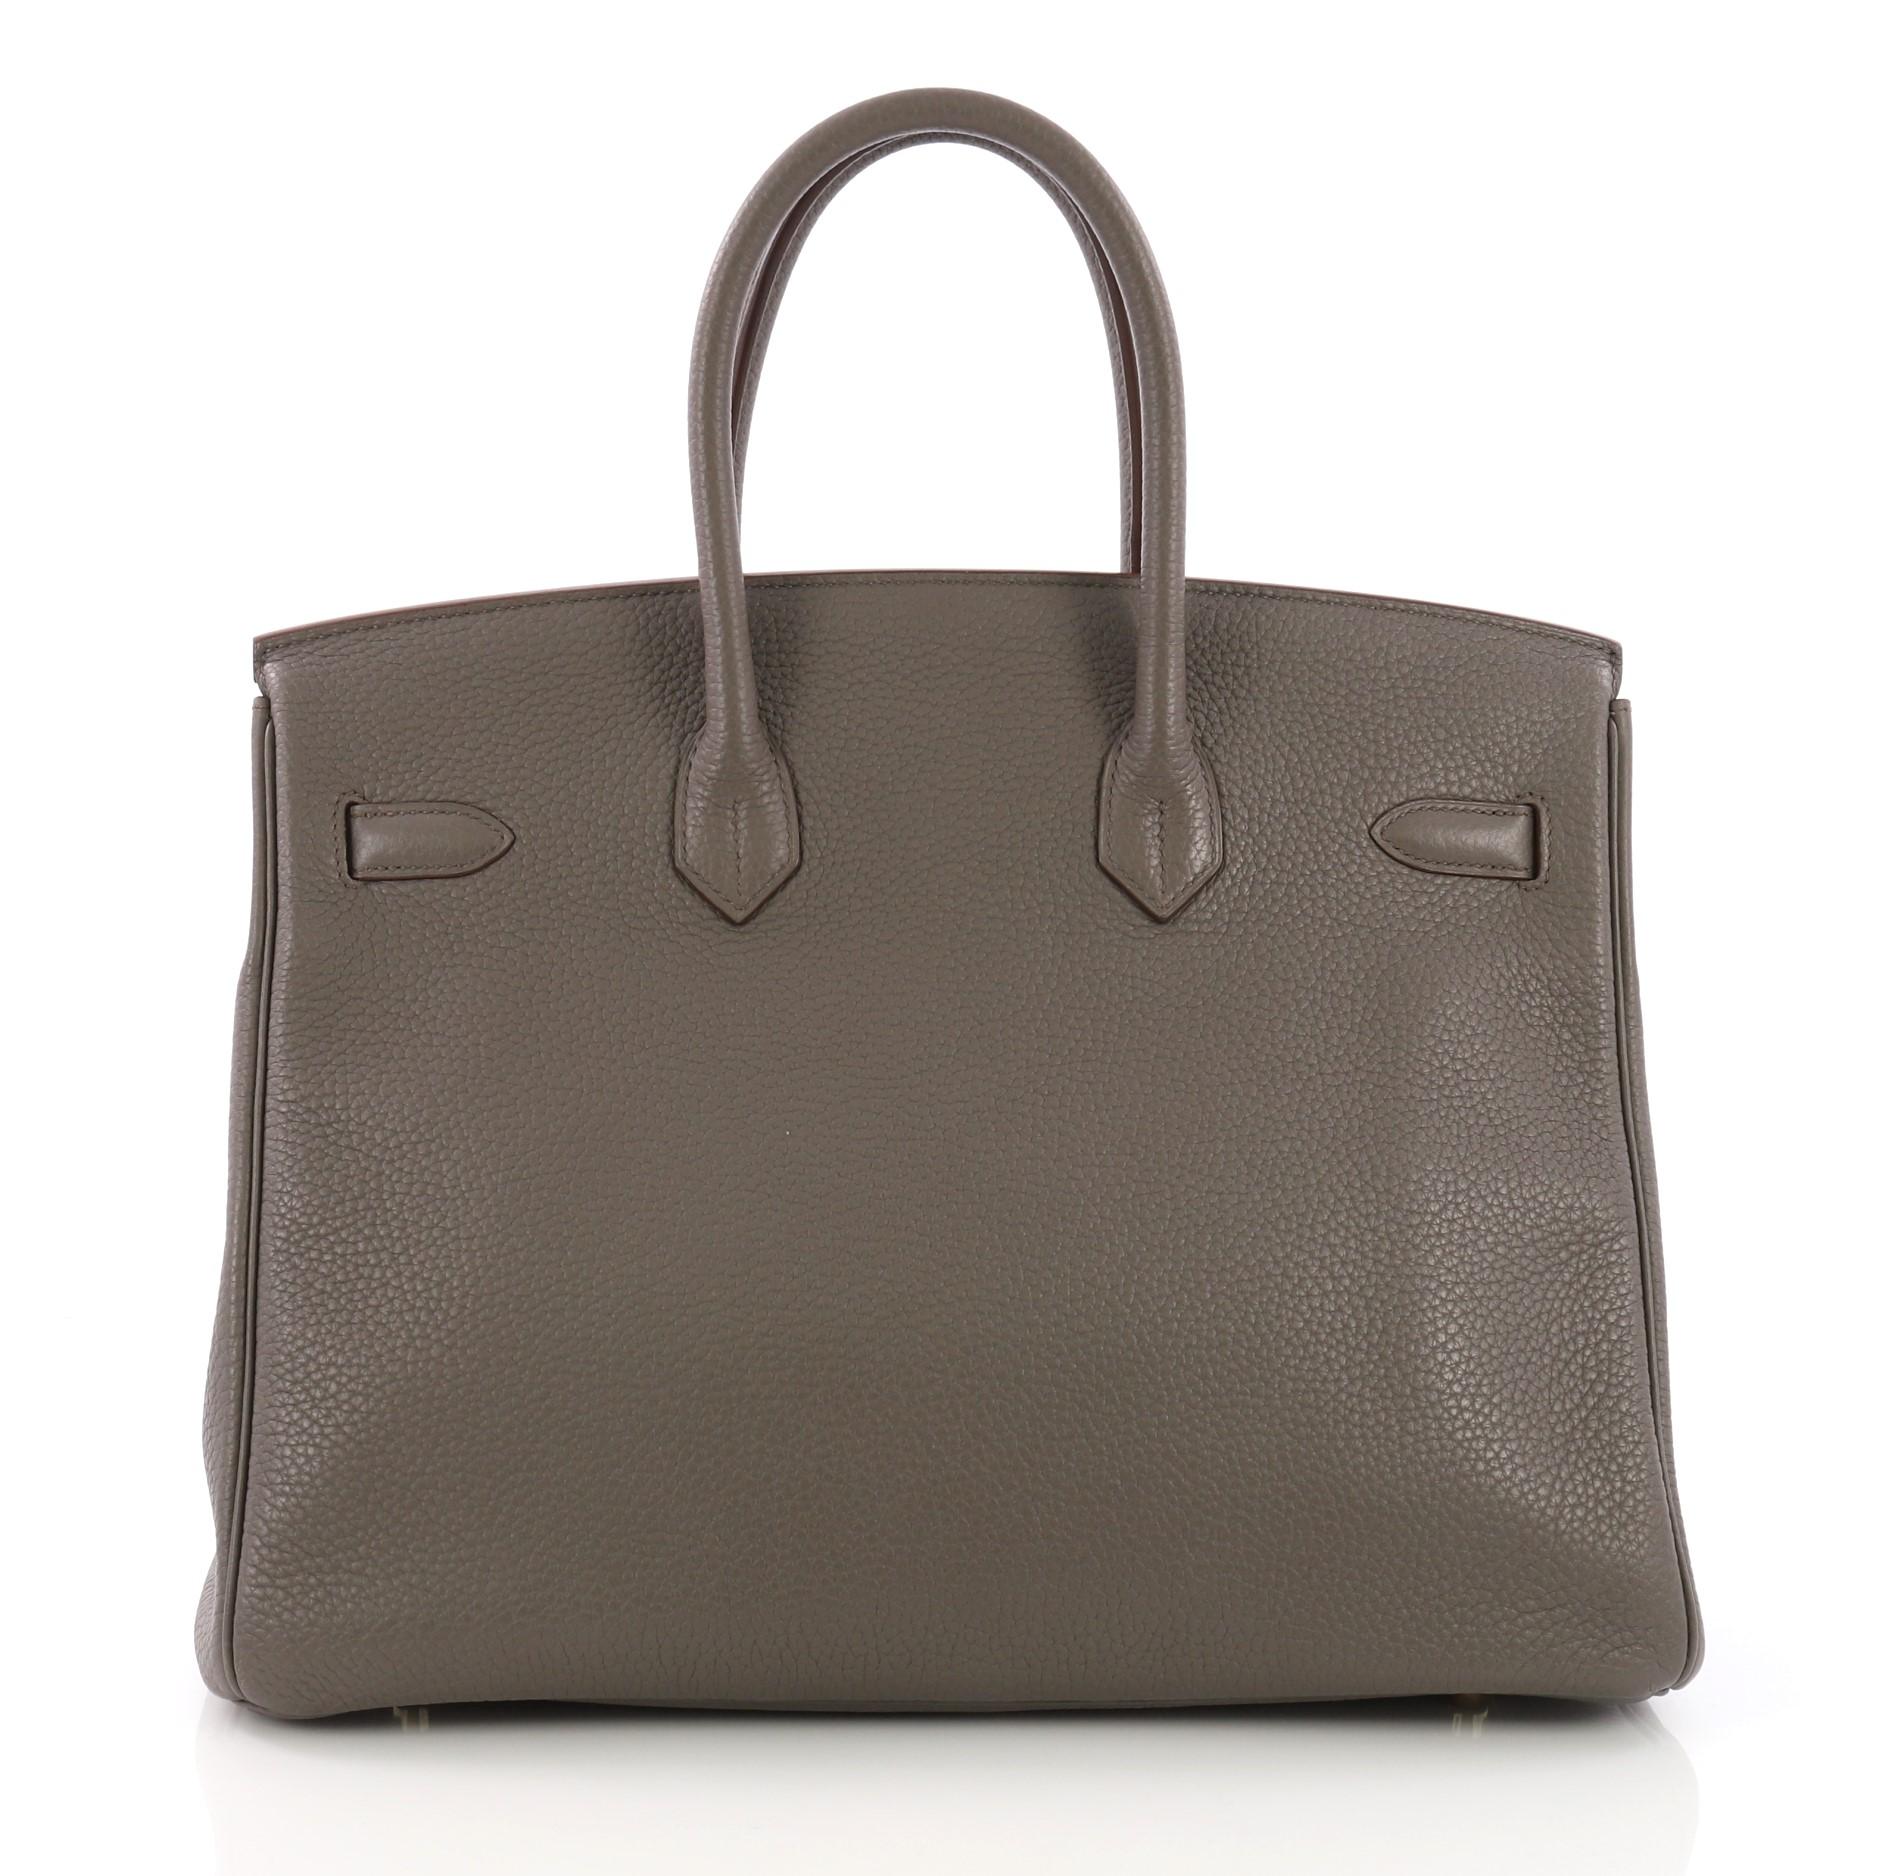 Gray Hermes Club Birkin Handbag Etain Clemence and Lizard with Gold Hardware 35